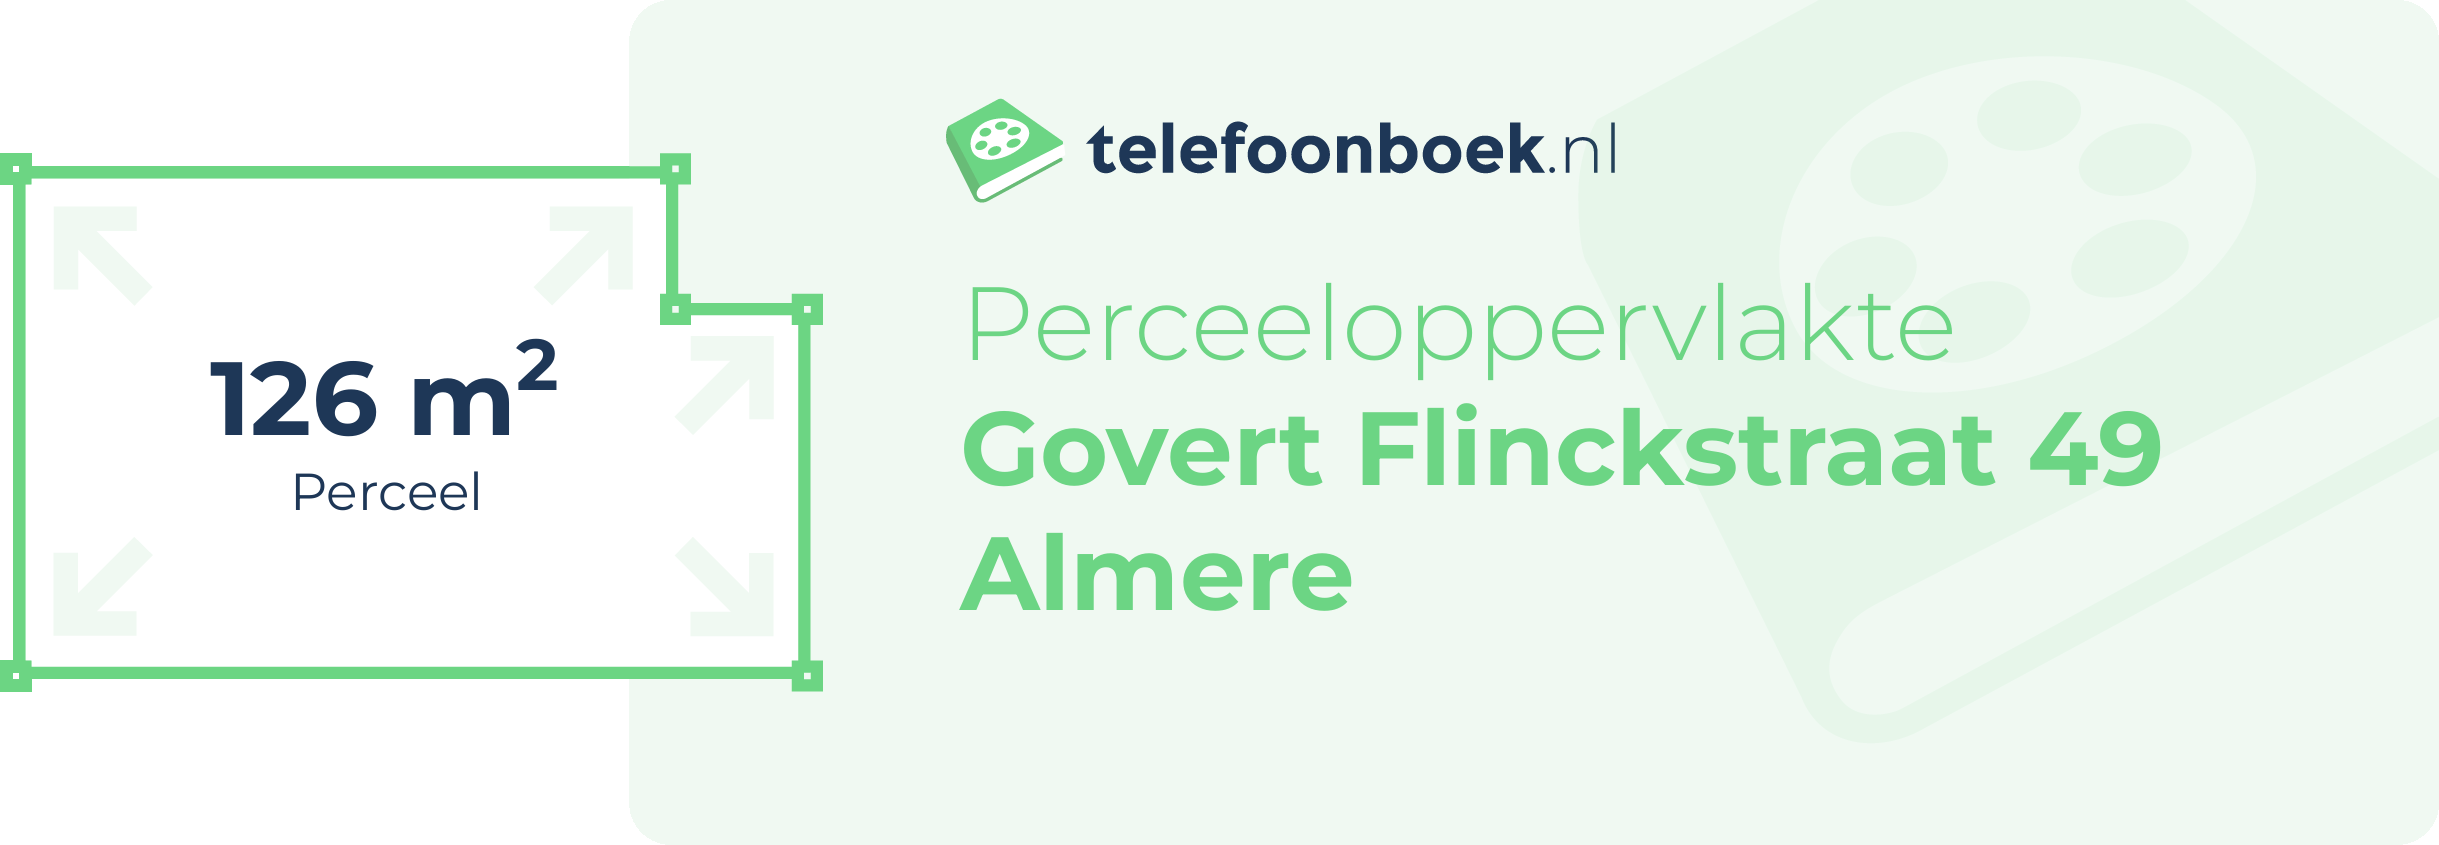 Perceeloppervlakte Govert Flinckstraat 49 Almere